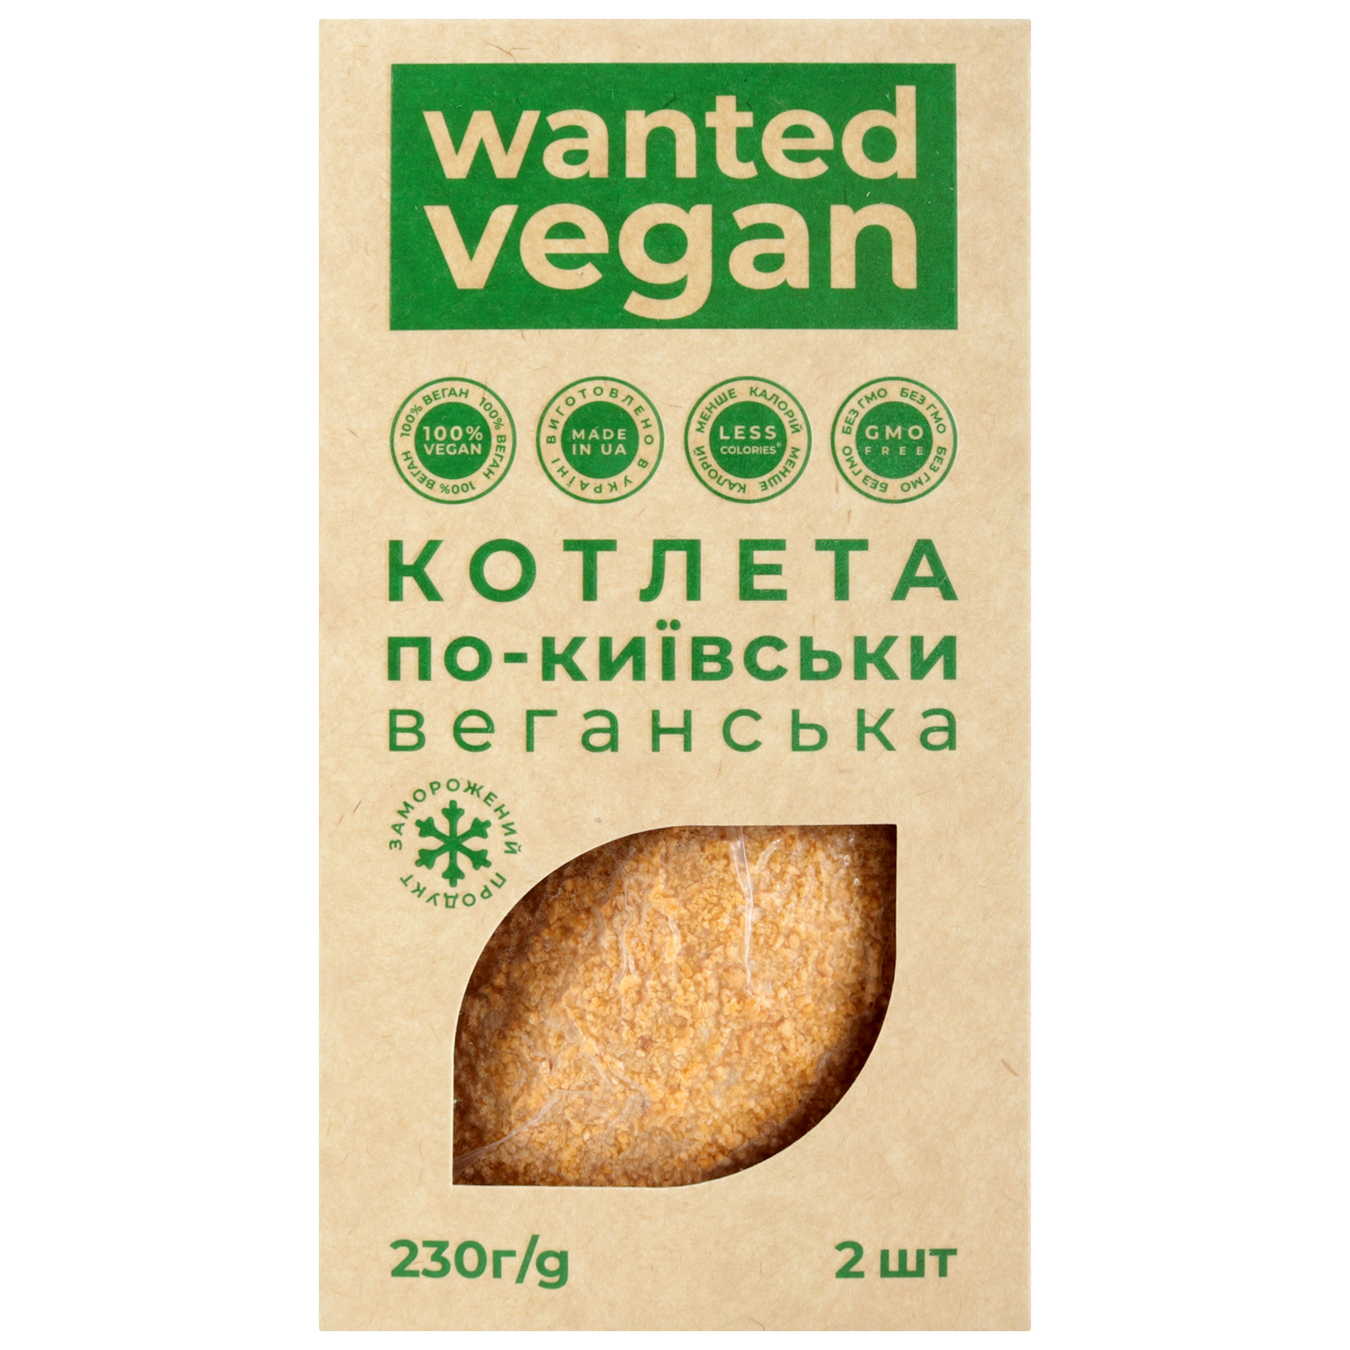 Wanted Vegan Kiev-style cutlet 230g